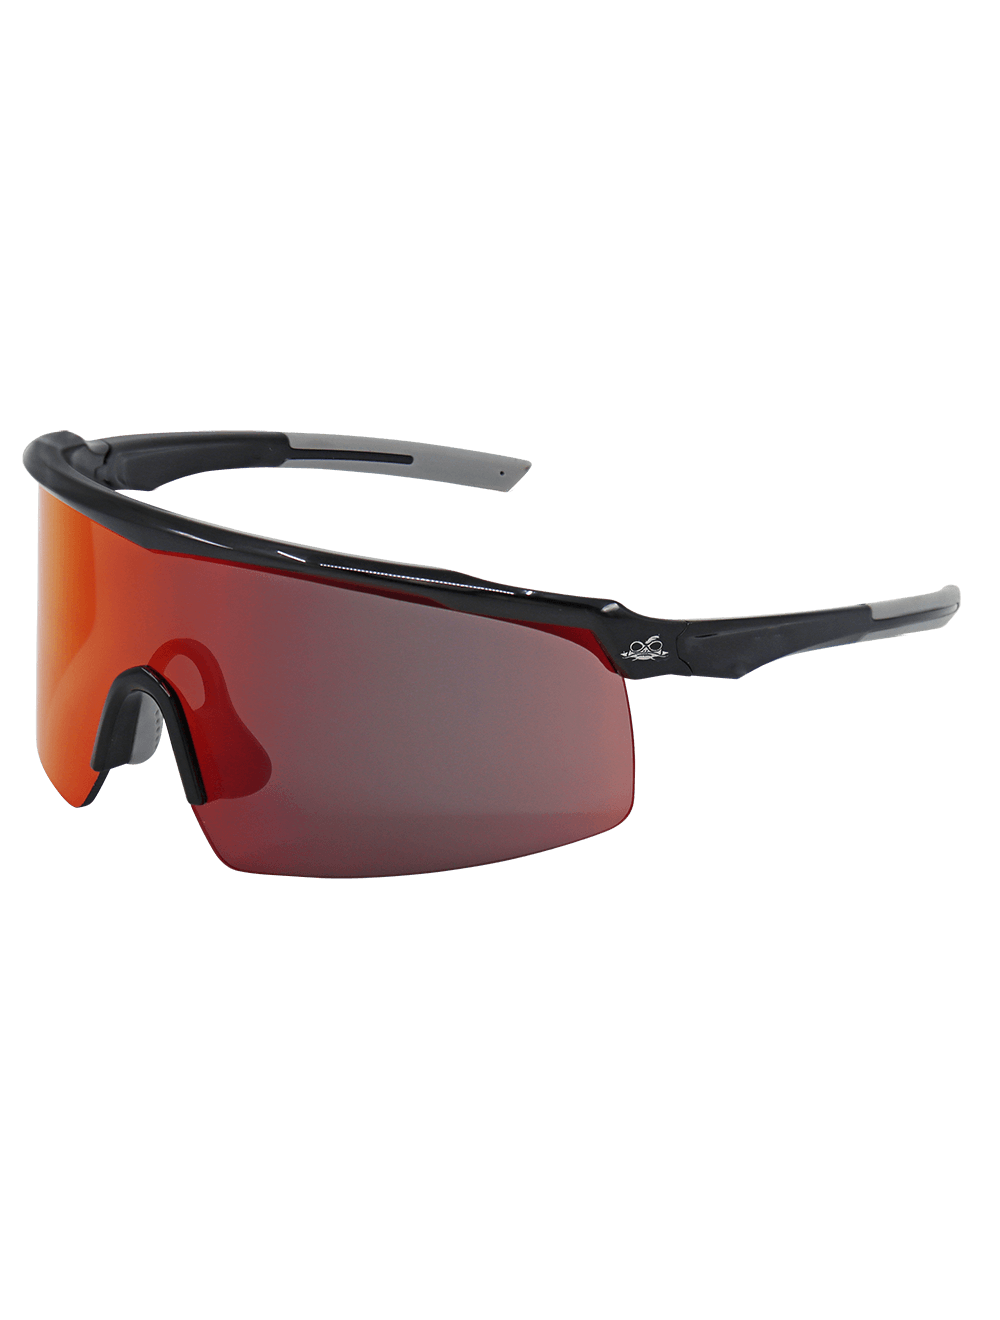 Whipray™ Red Mirror Performance Fog Technology Lens, Shiny Black Frame Safety Glasses - BH32510PFT